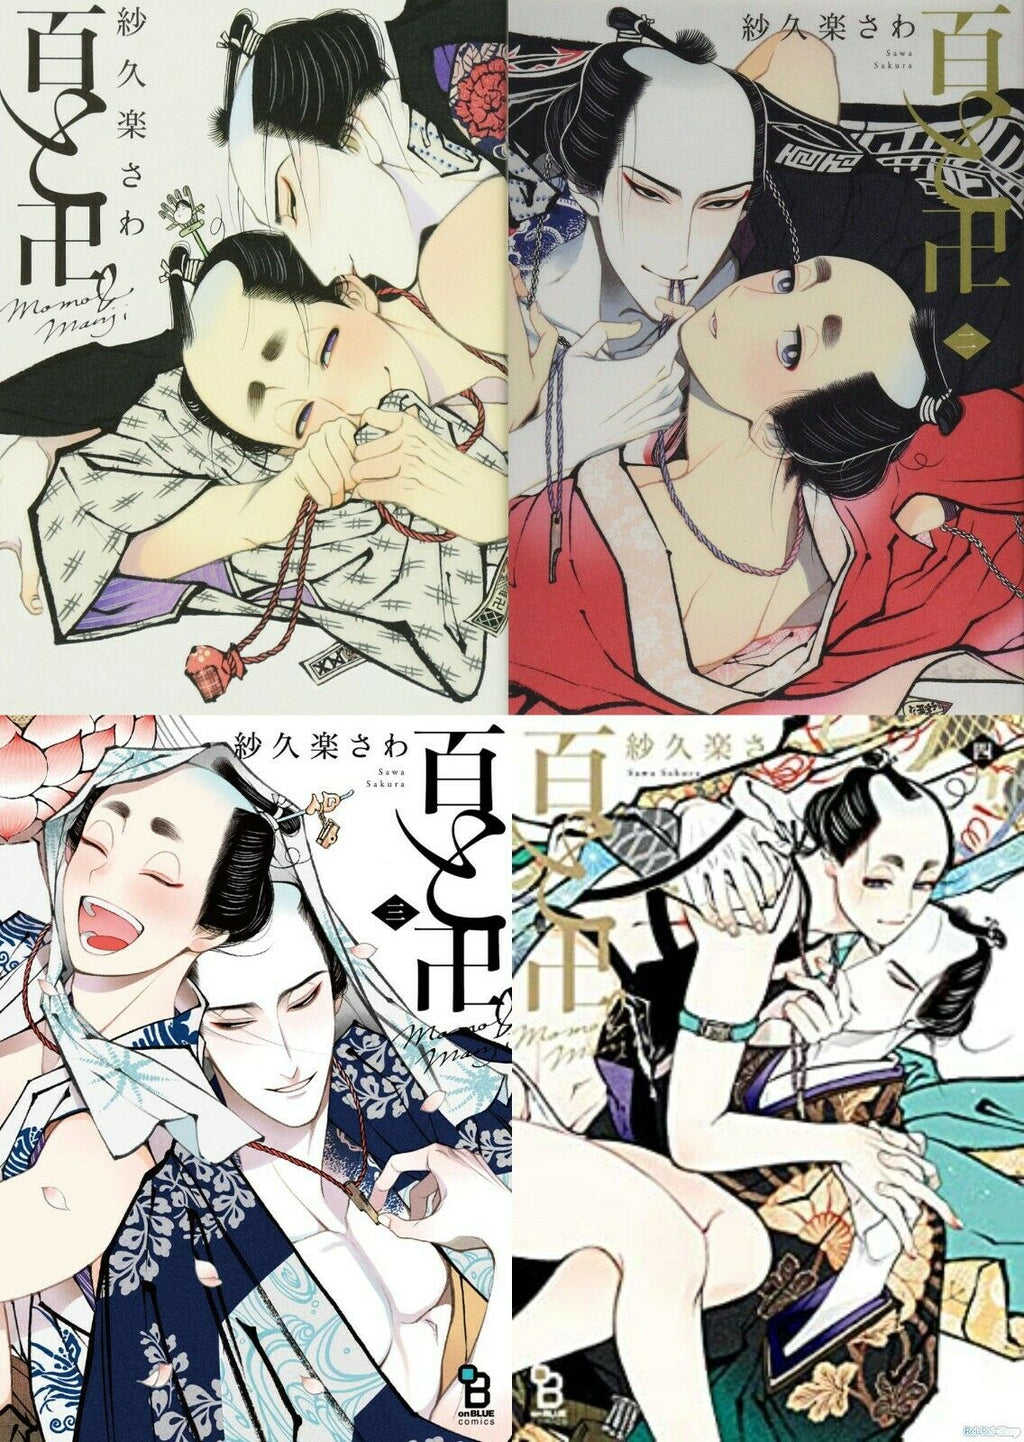 Momo to Manji 百と卍 Vol. 1-4 set / Japanese Boys Love Comic Manga Book NEW